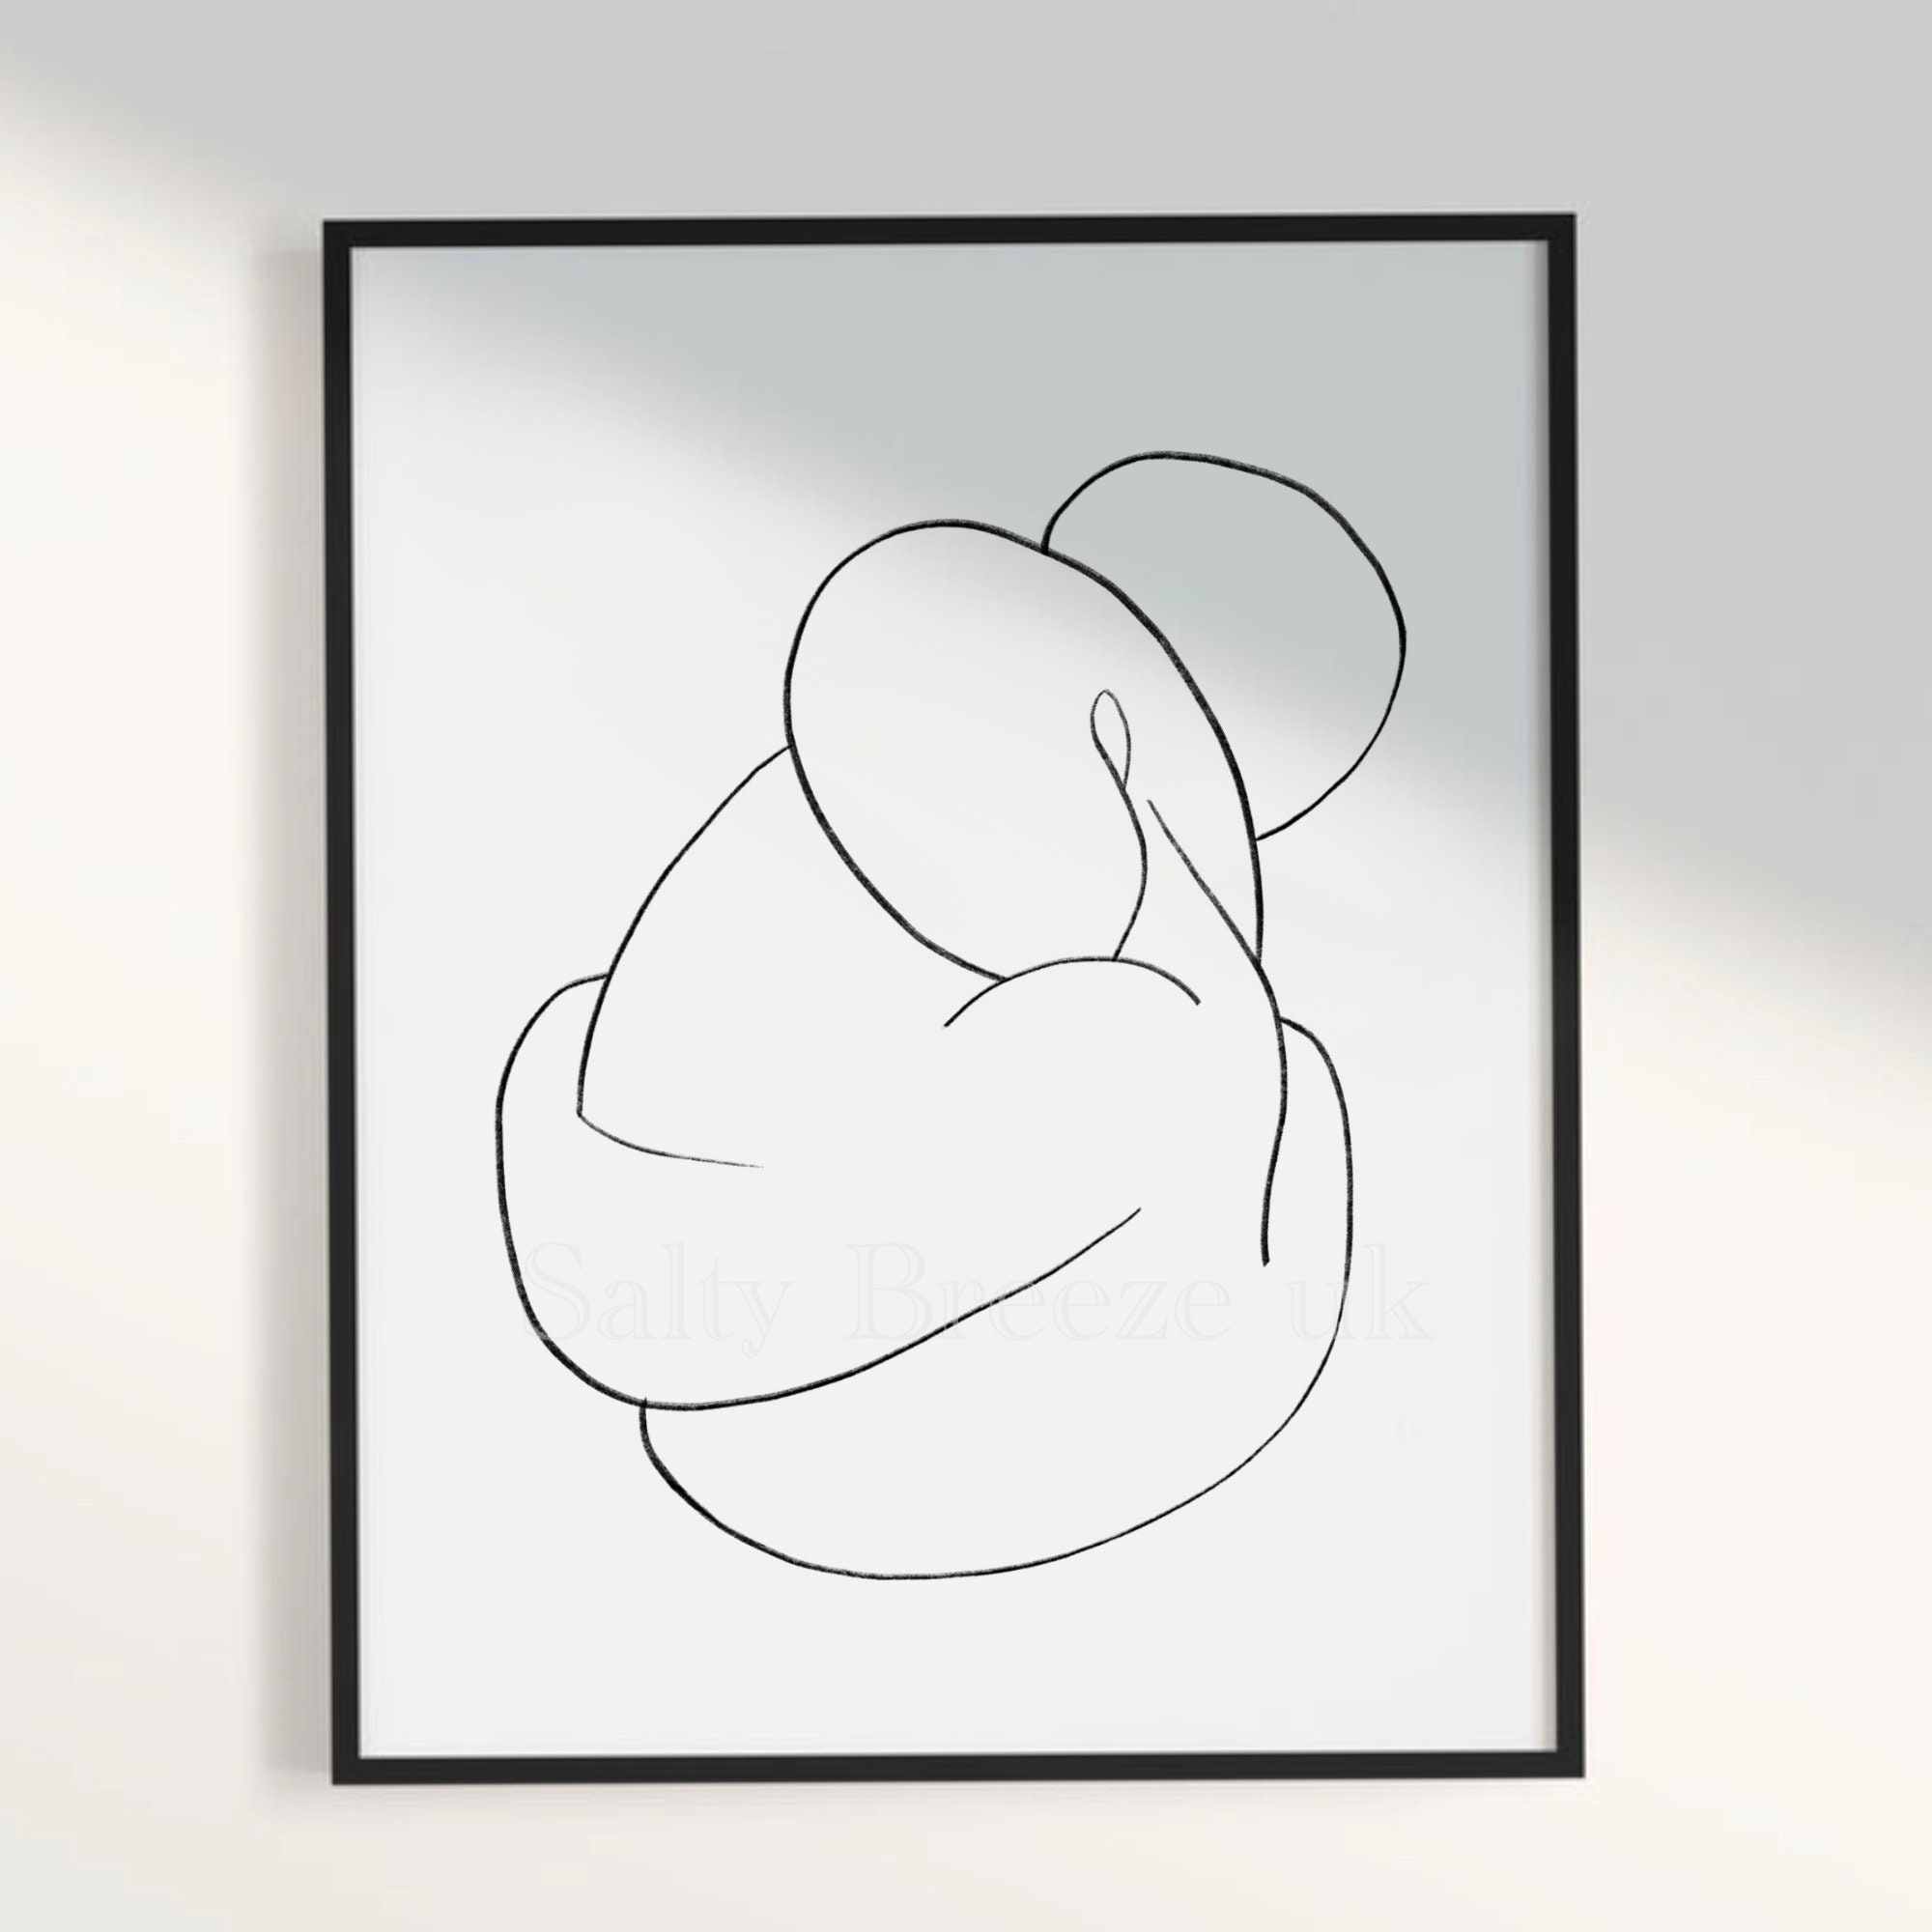 line art set of romantic couple hugging illustration vector hand